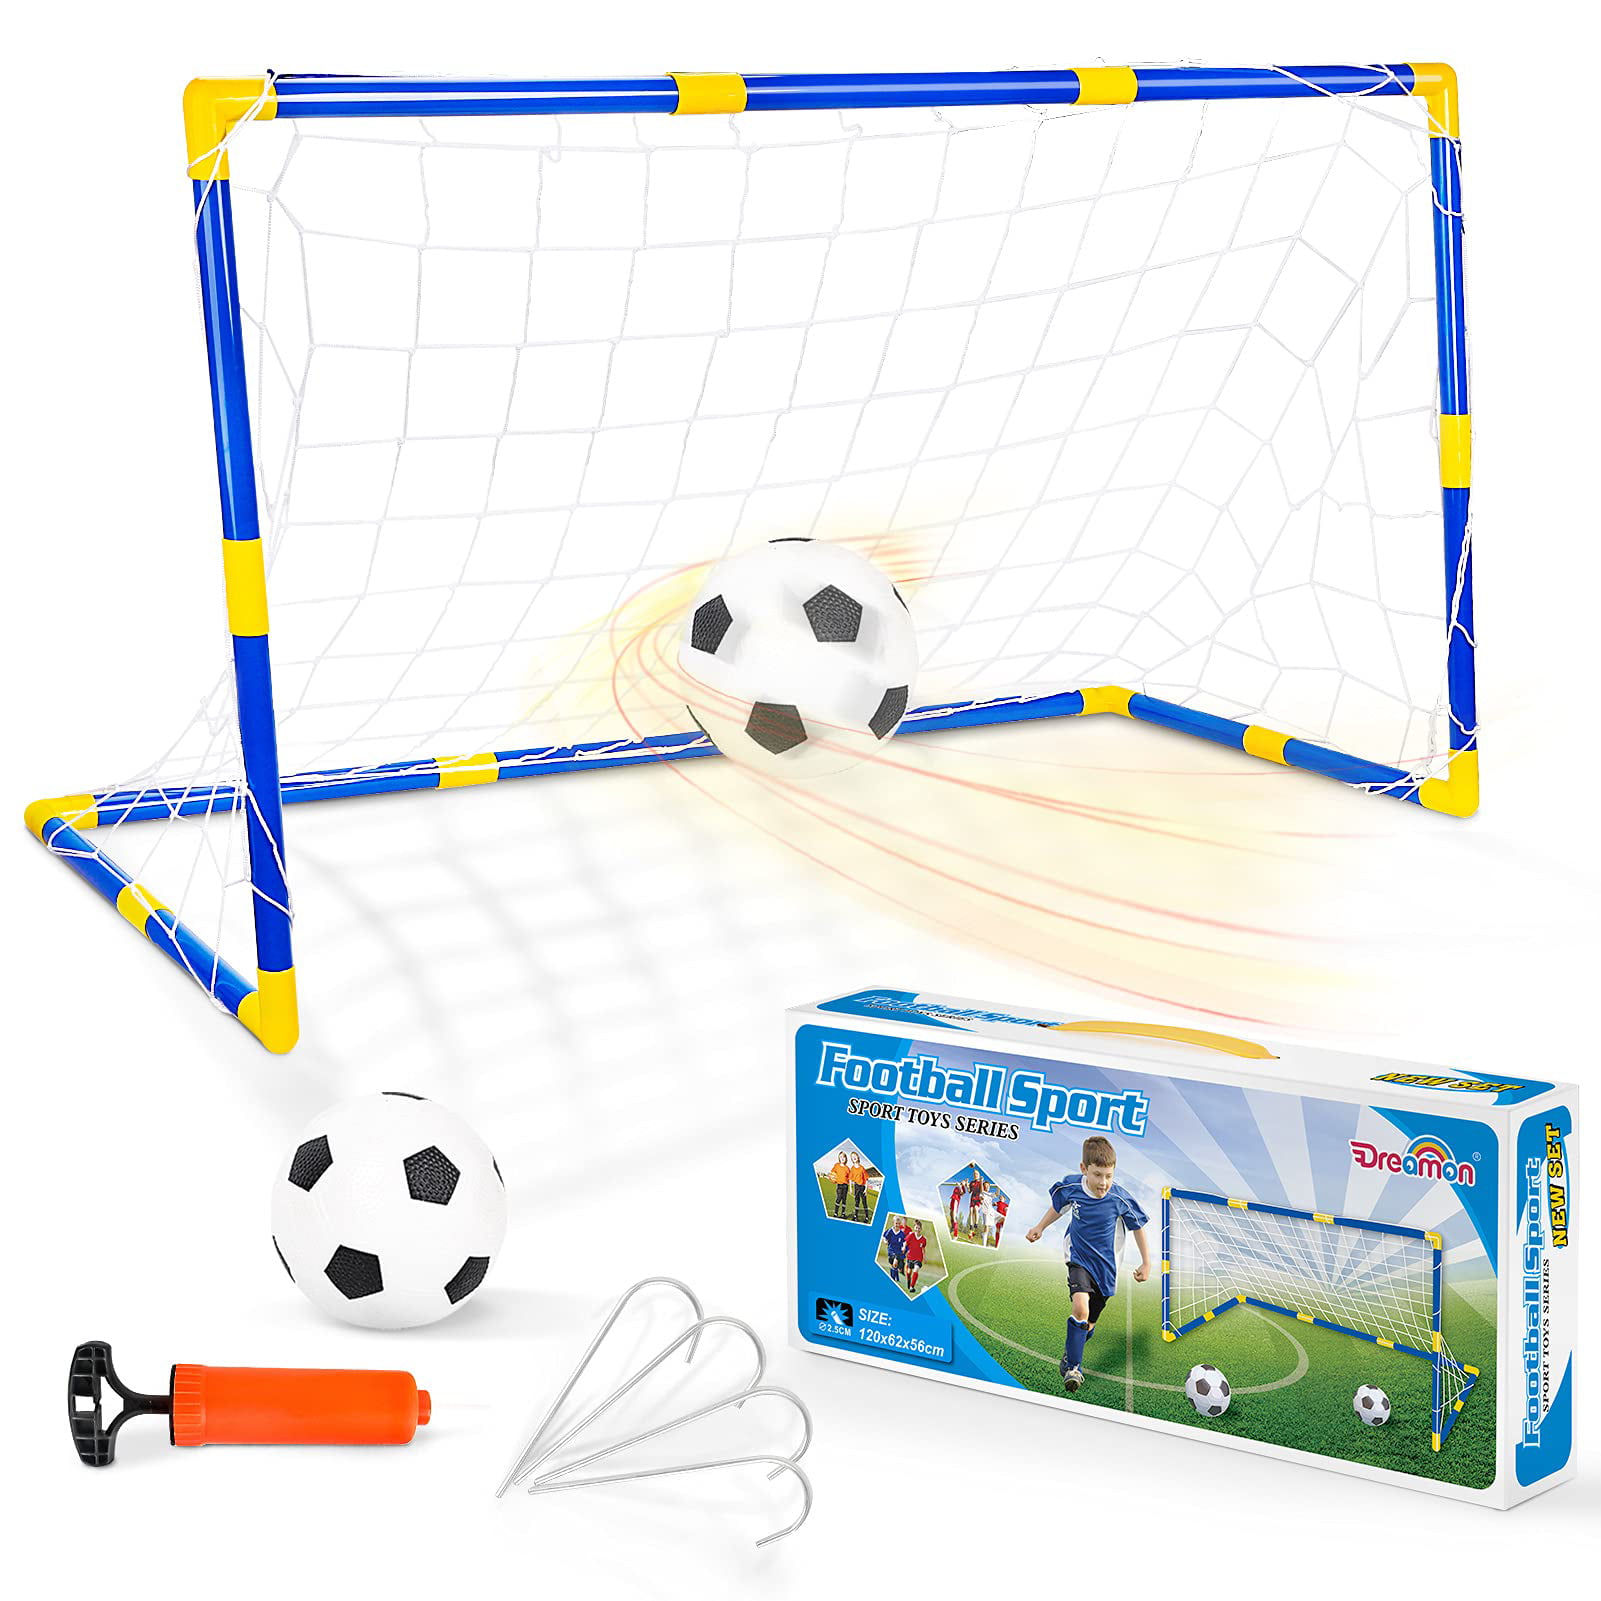 Children Ages 3 with Ball Beginner Sports Game Net Goals Foldable Soccer Set 